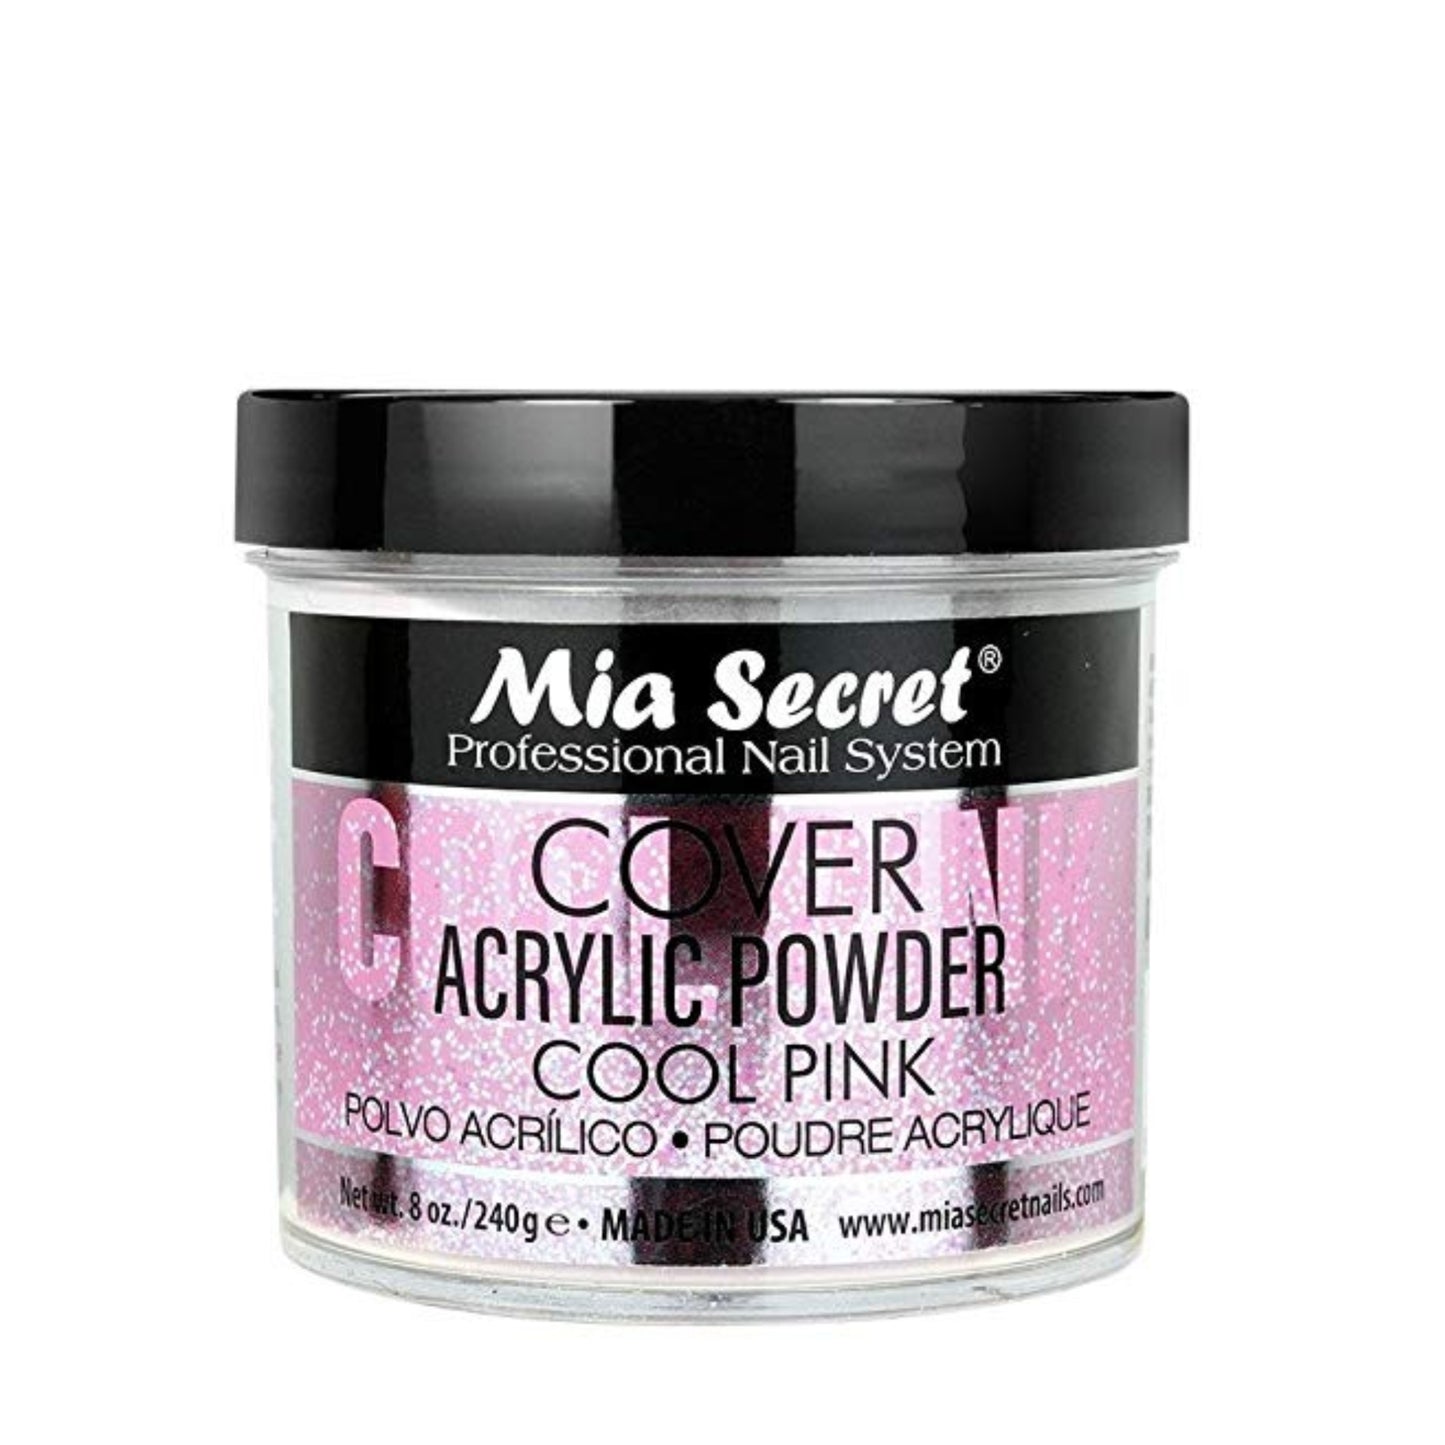 Mia Secret Acrylic Powder - Cover Cool Pink